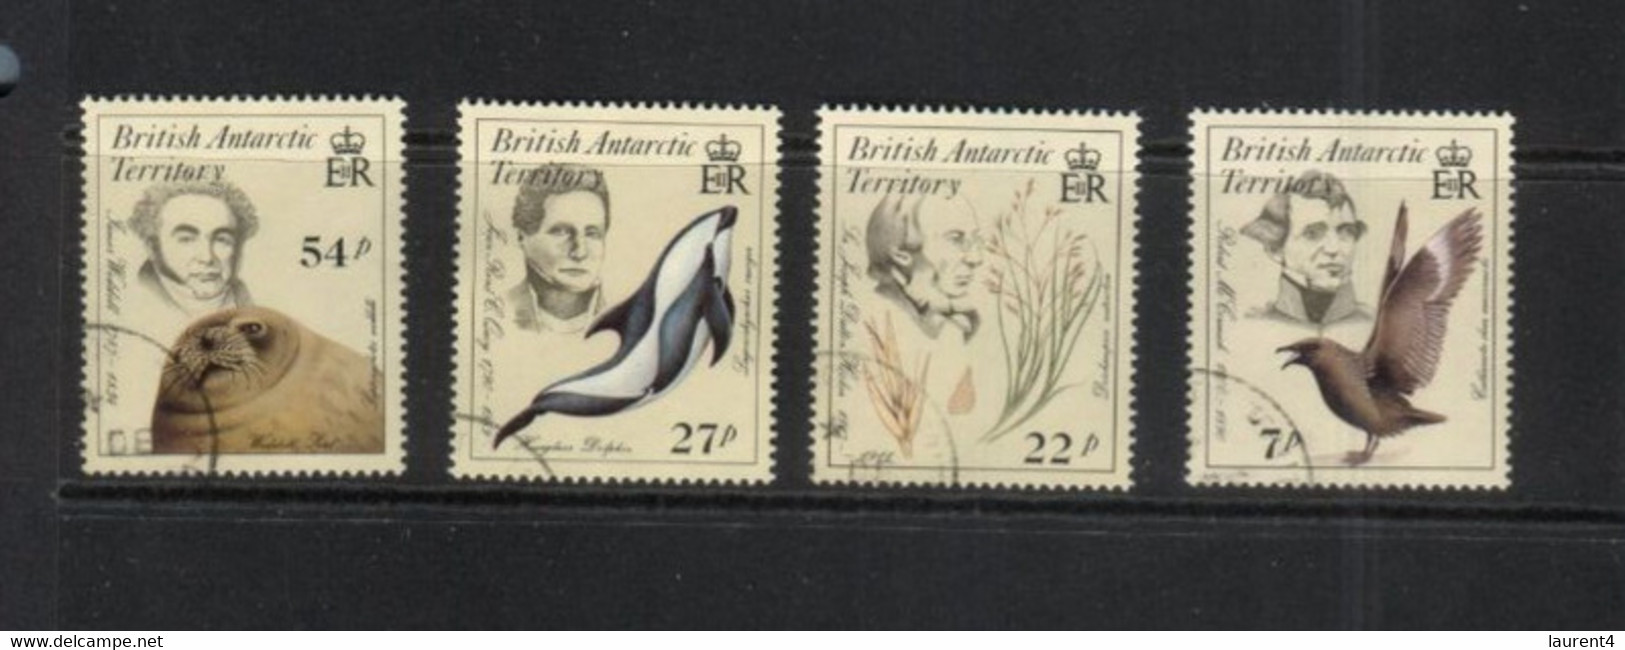 (8-10-2020) British Antarctic Territory - 4 Used Stamps  (Explorer) - Usados